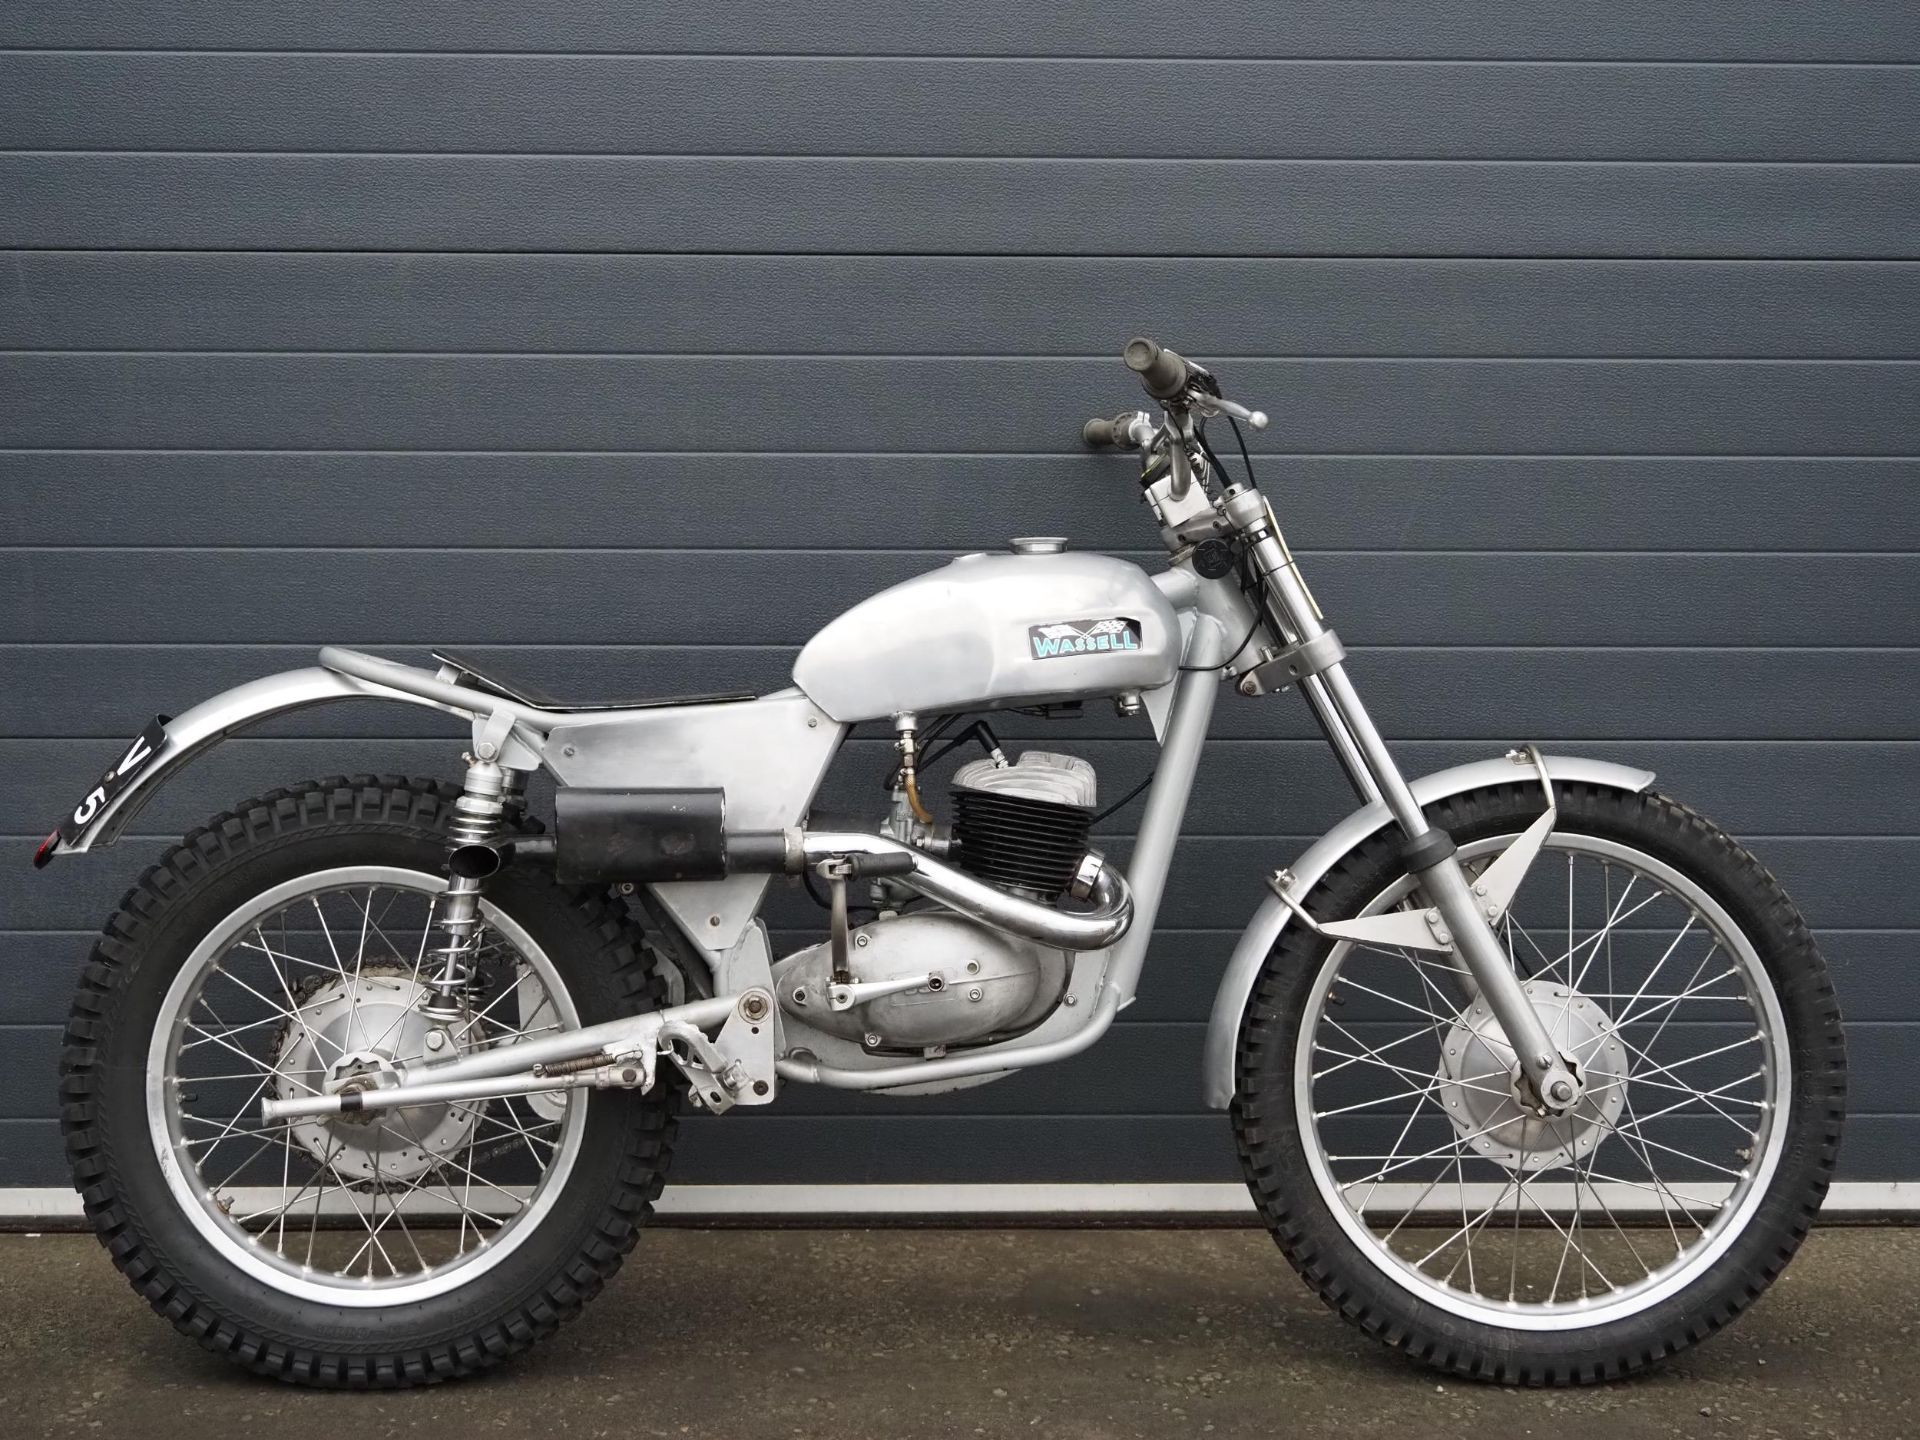 Wassell Bantam trials bike. 175cc. 1952. Frame No. W035B Engine No. D14B1685 This bike was built